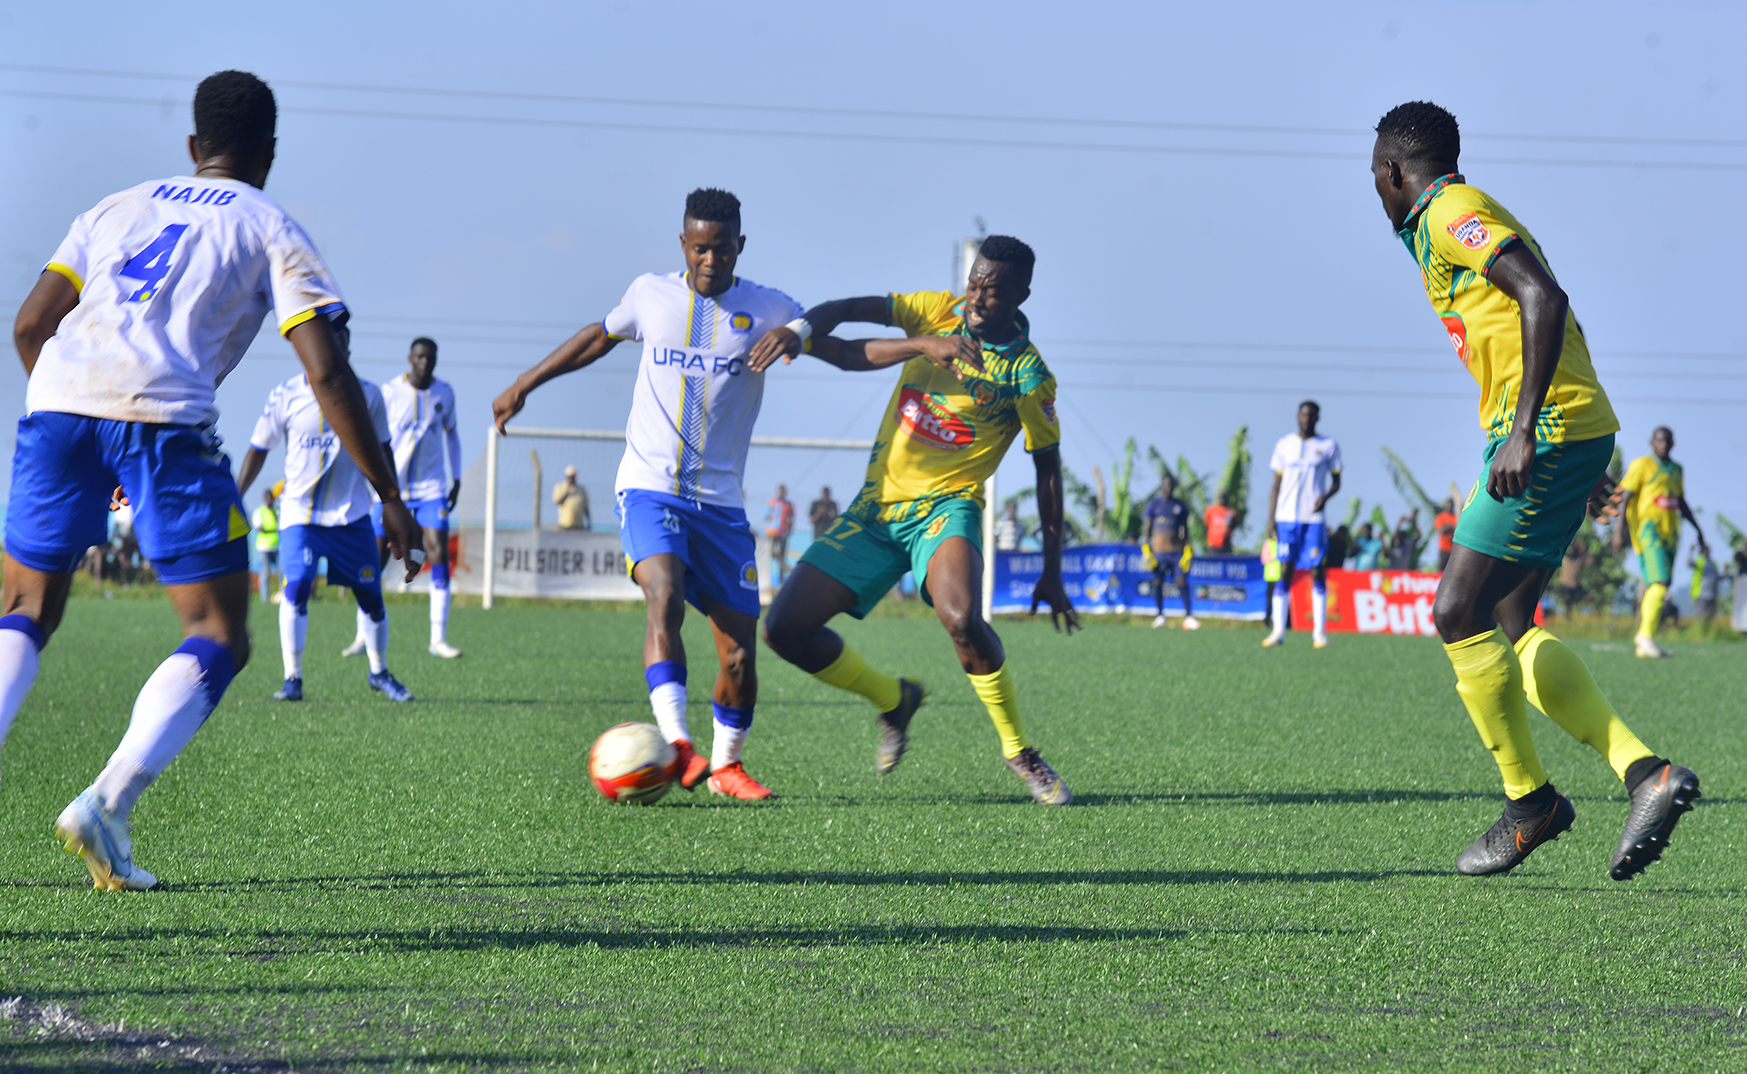 URA Football Club resurgence continues with win at BUL